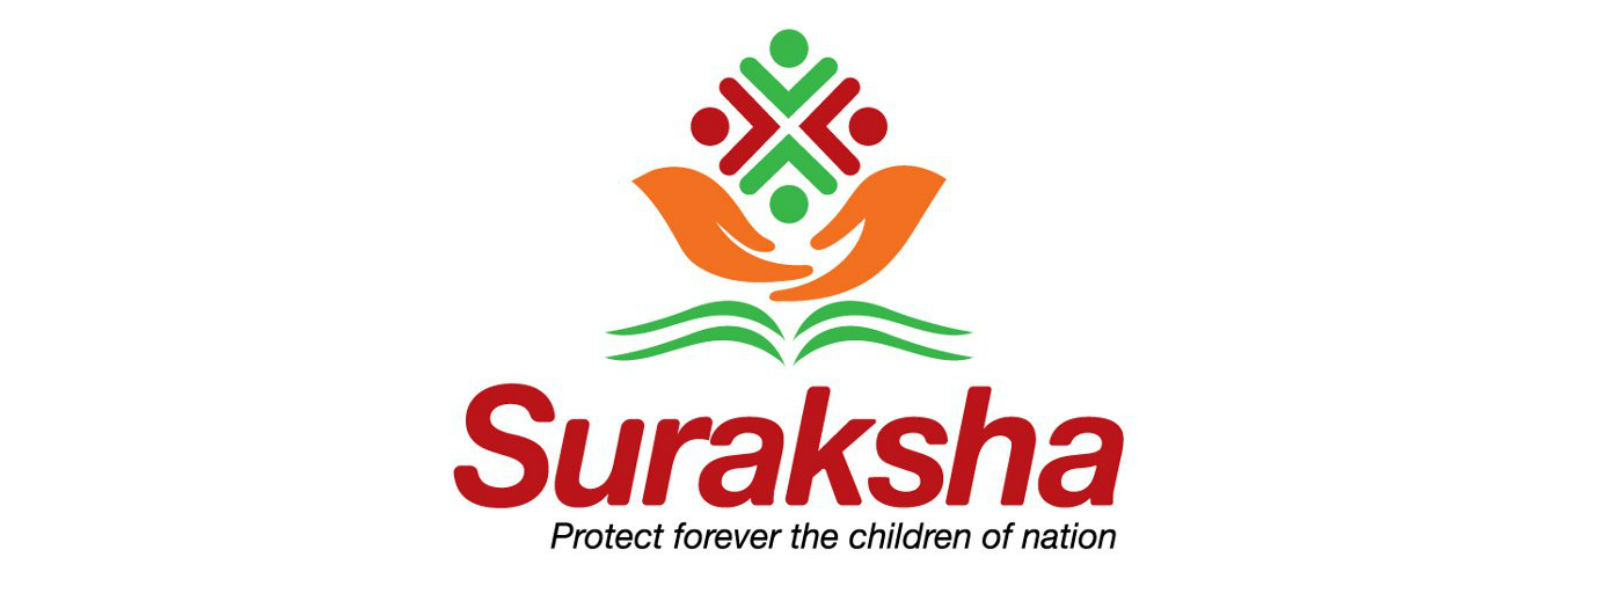 Increased benefits under the Suraksha insurance